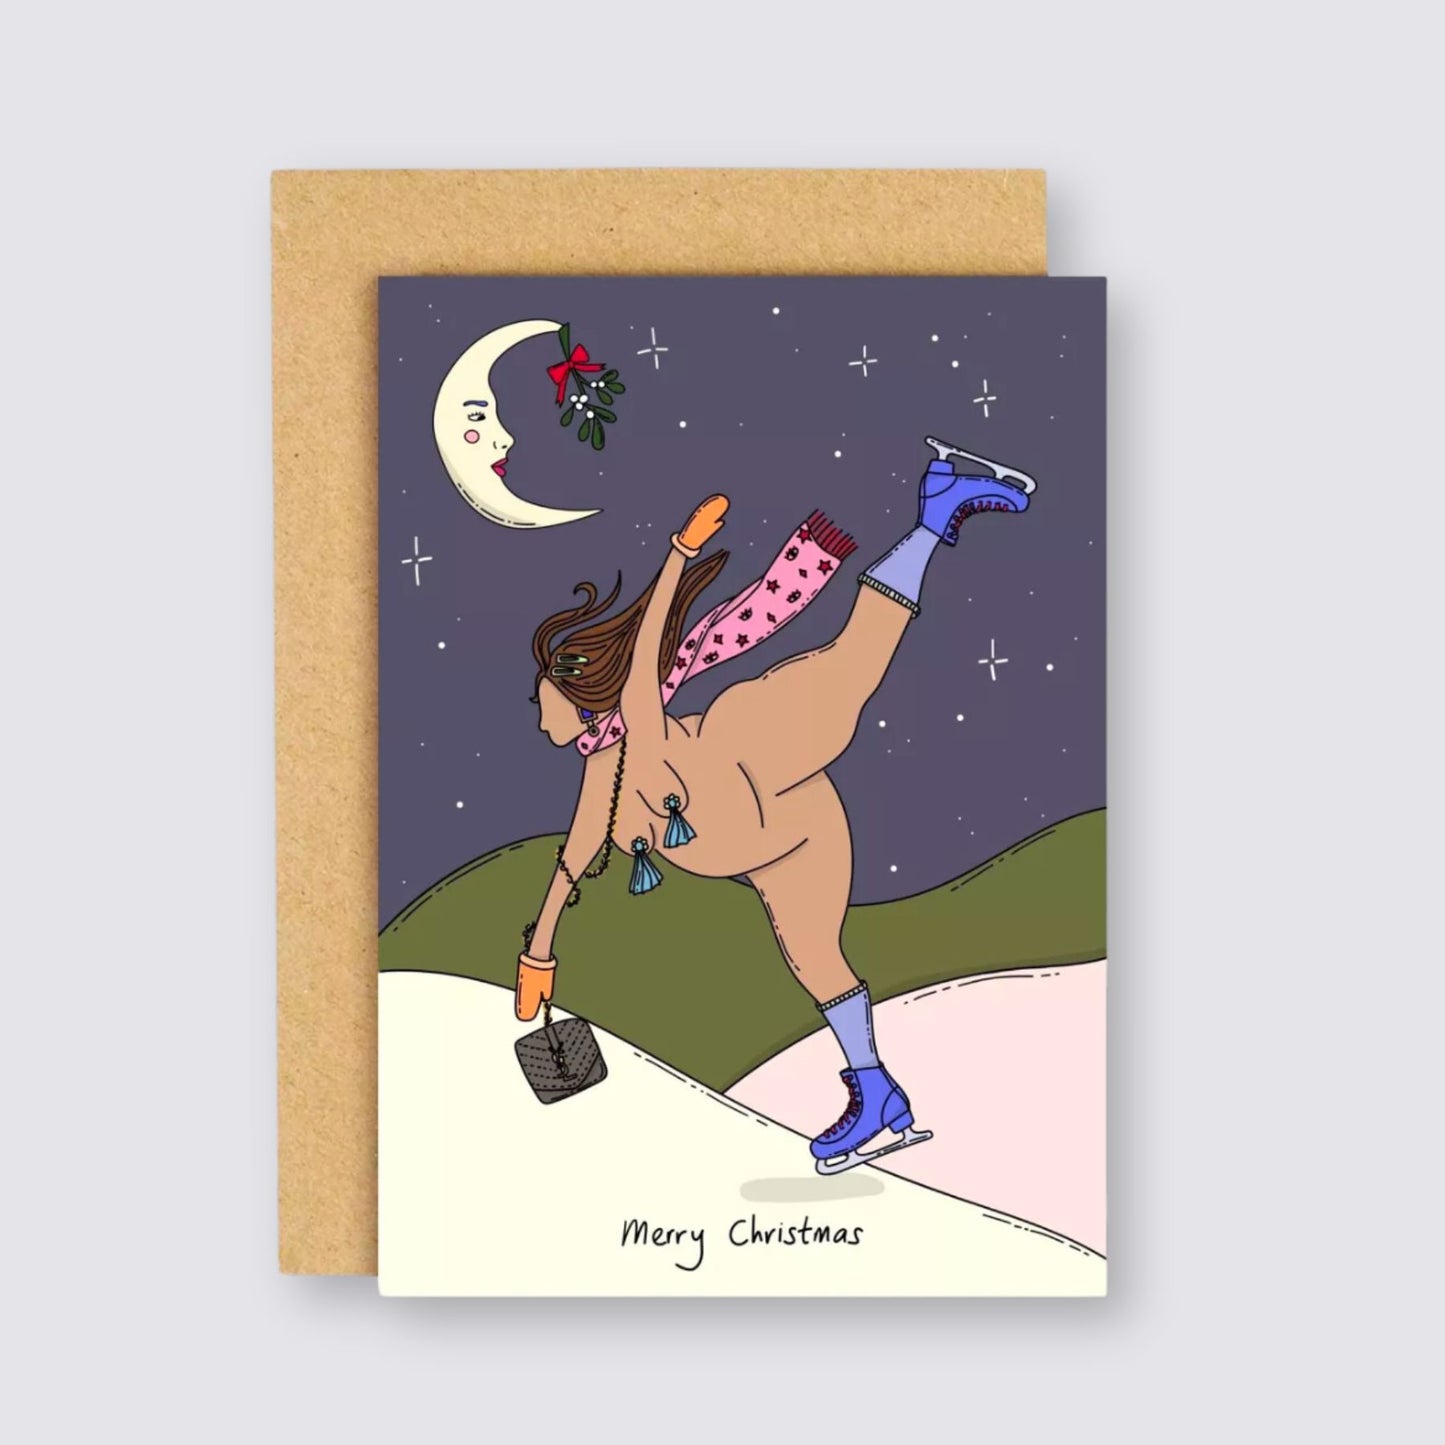 Skating Under the Moon